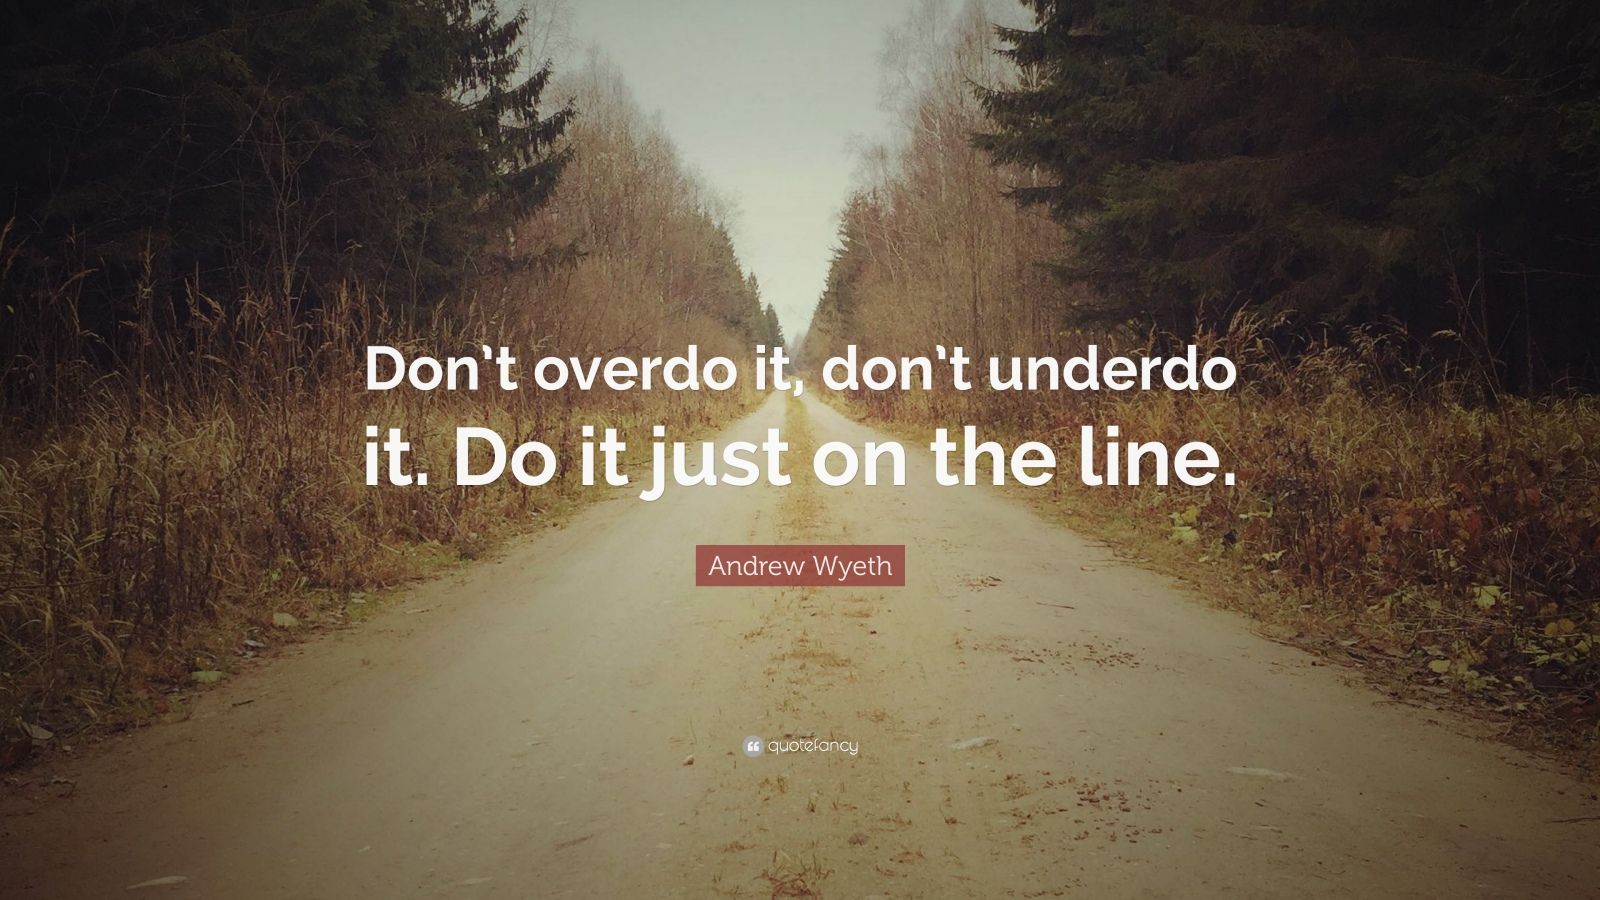 Top 40 Andrew Wyeth Quotes (2021 Update) - Quotefancy